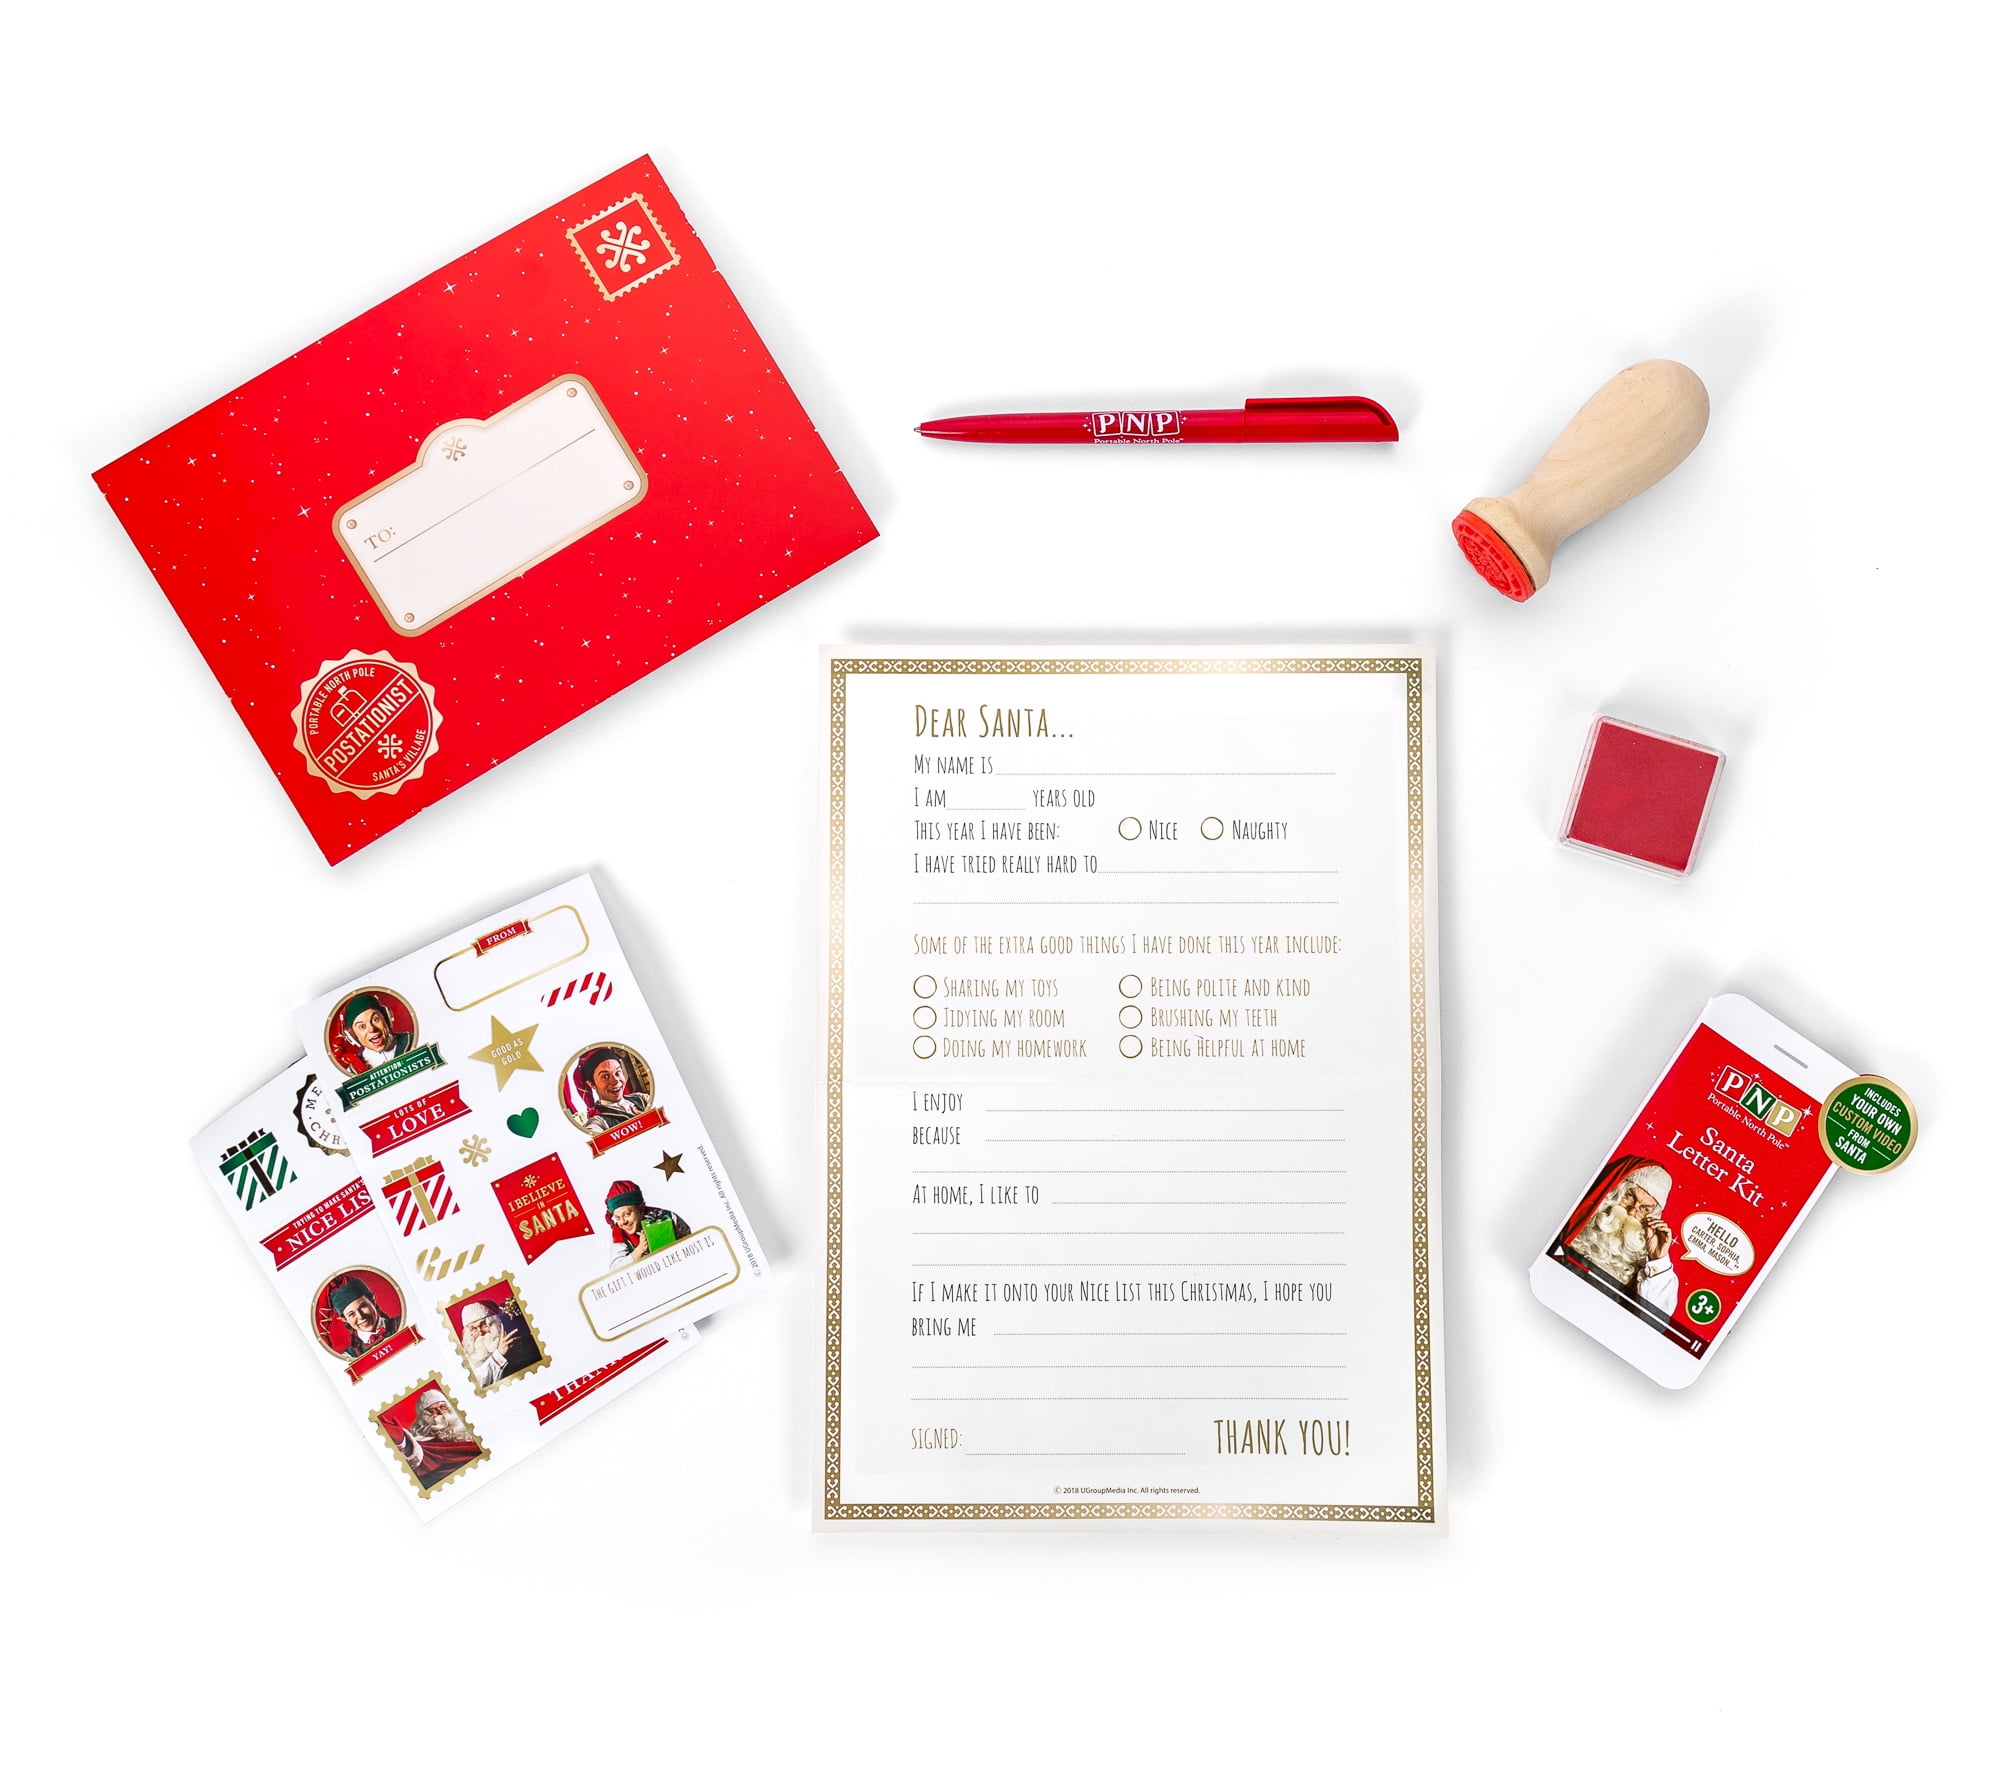 Details about   Portable North Pole Santa Letter Kit New 